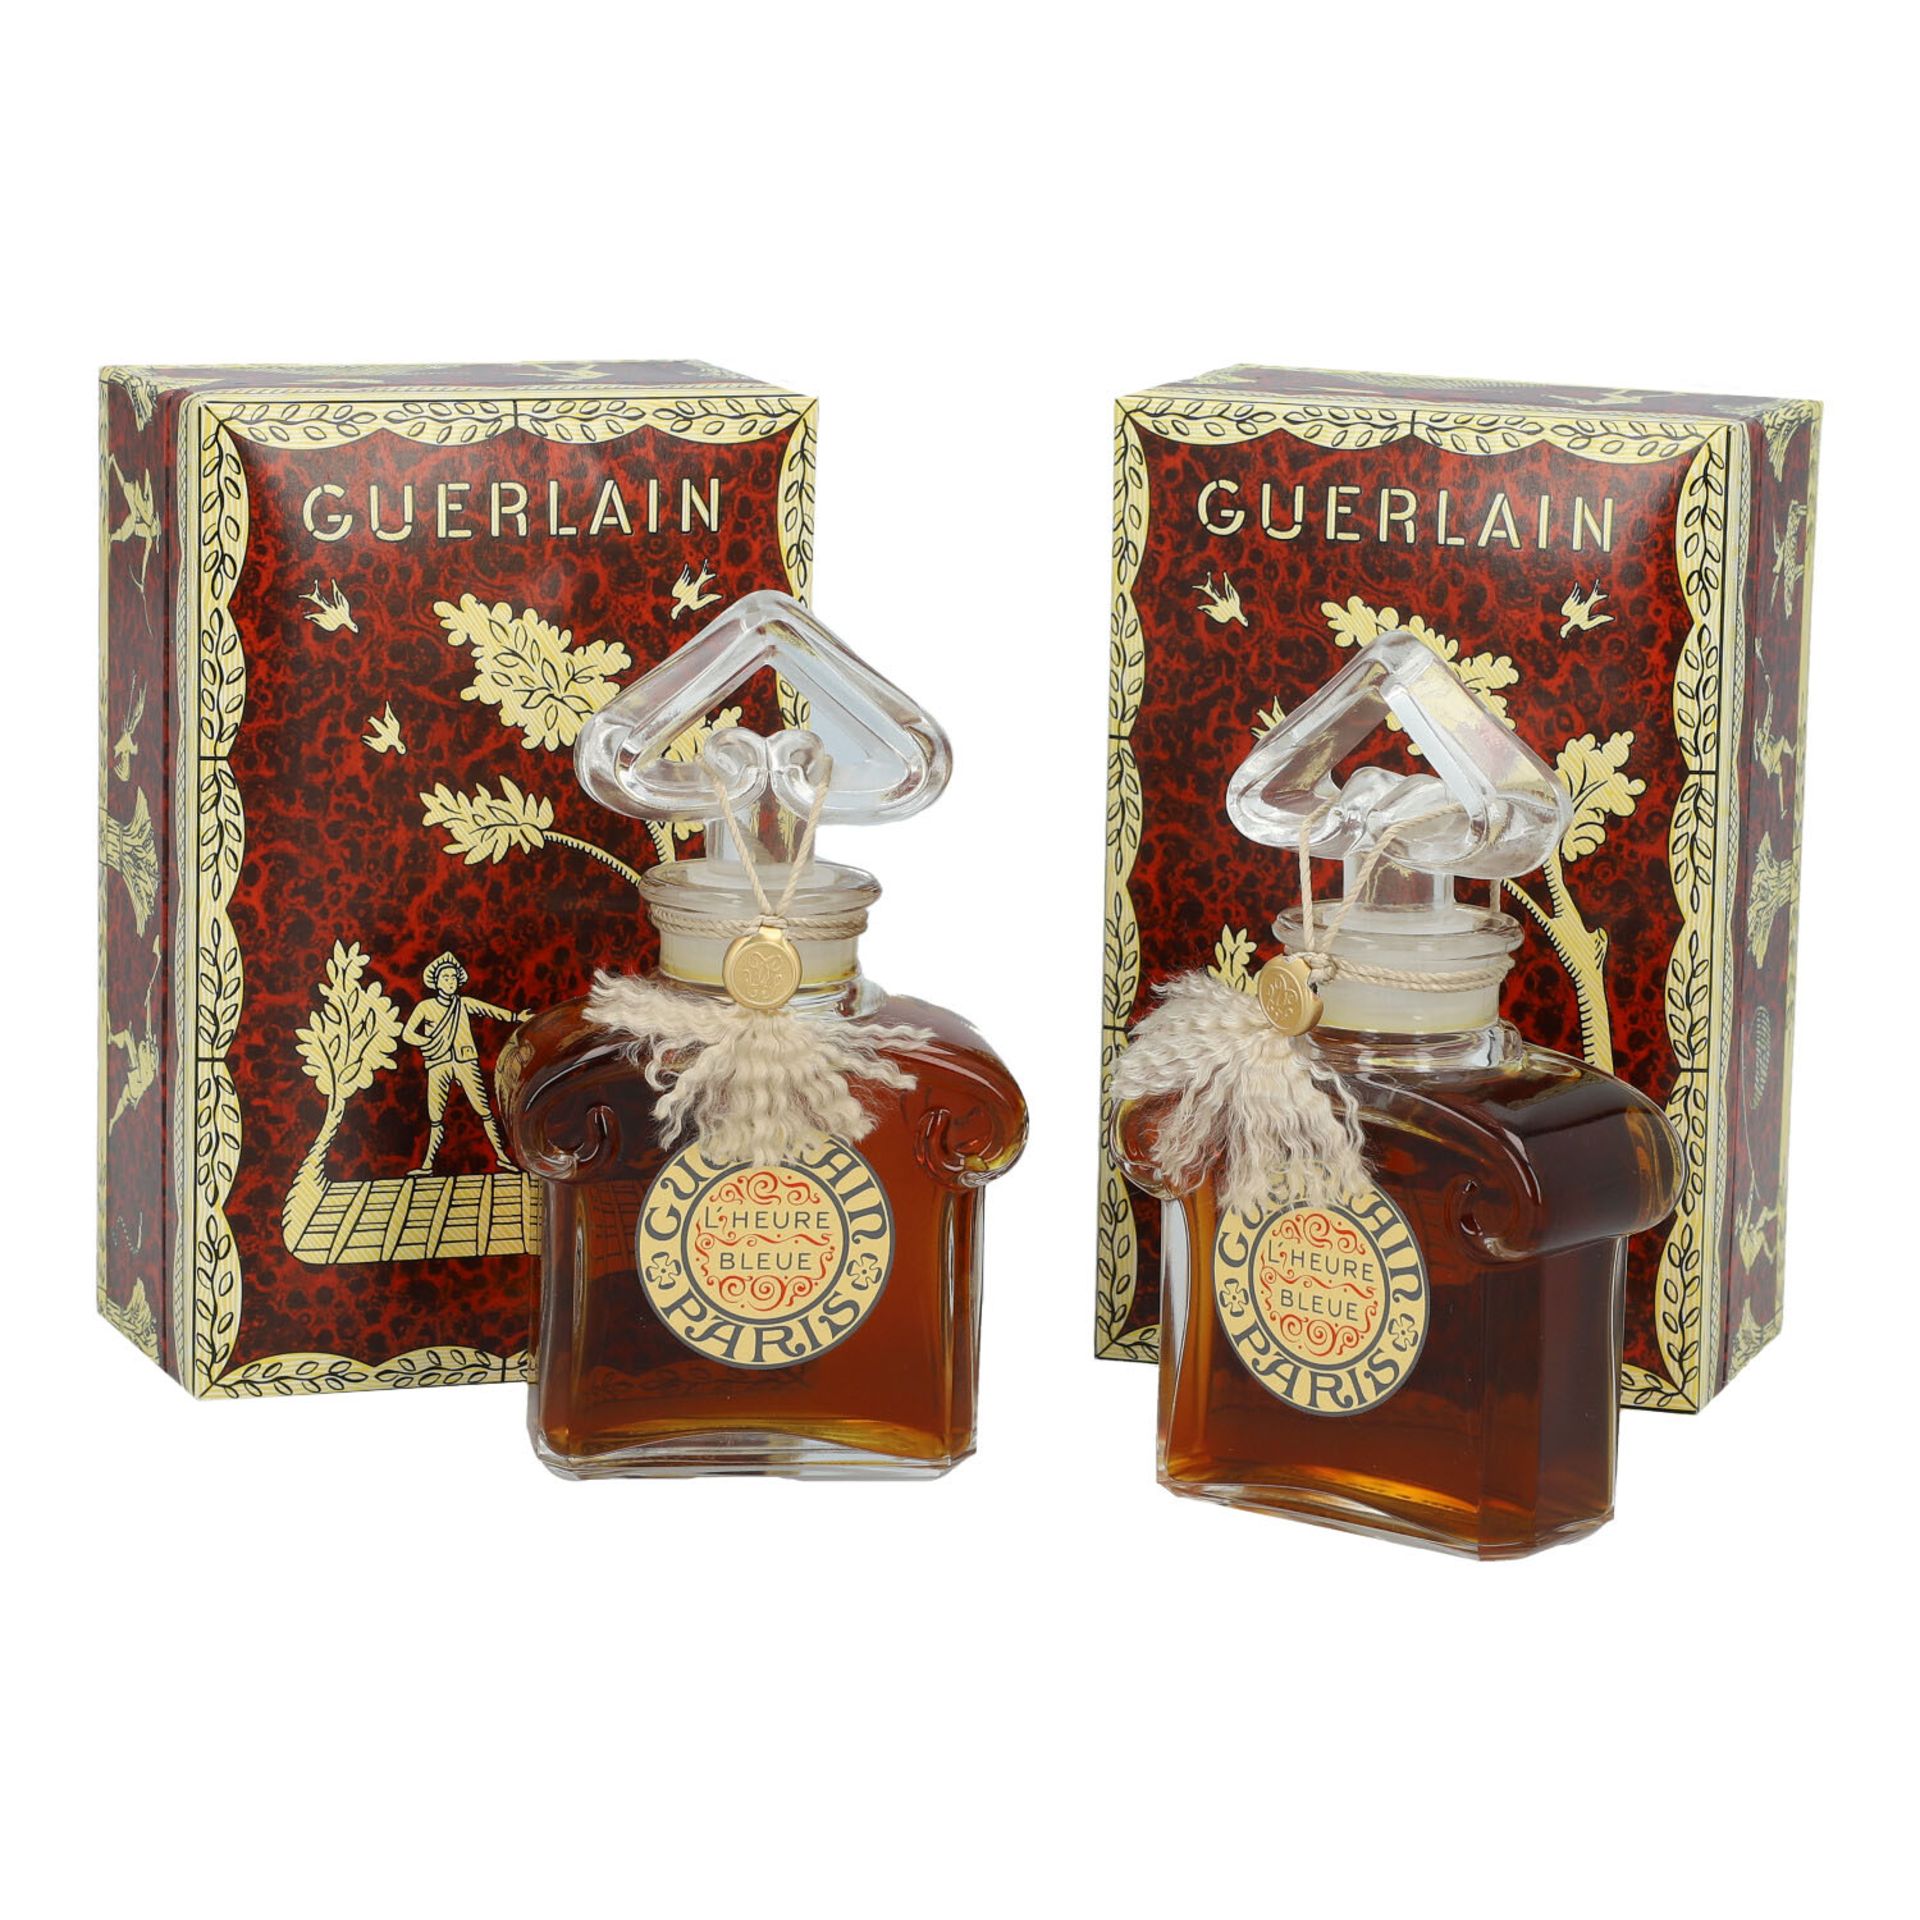 GUERLAIN Parfum "L'HEURE BLEUE", Koll.: 1912, Kaufpreis: je 449,50€. - Bild 4 aus 4